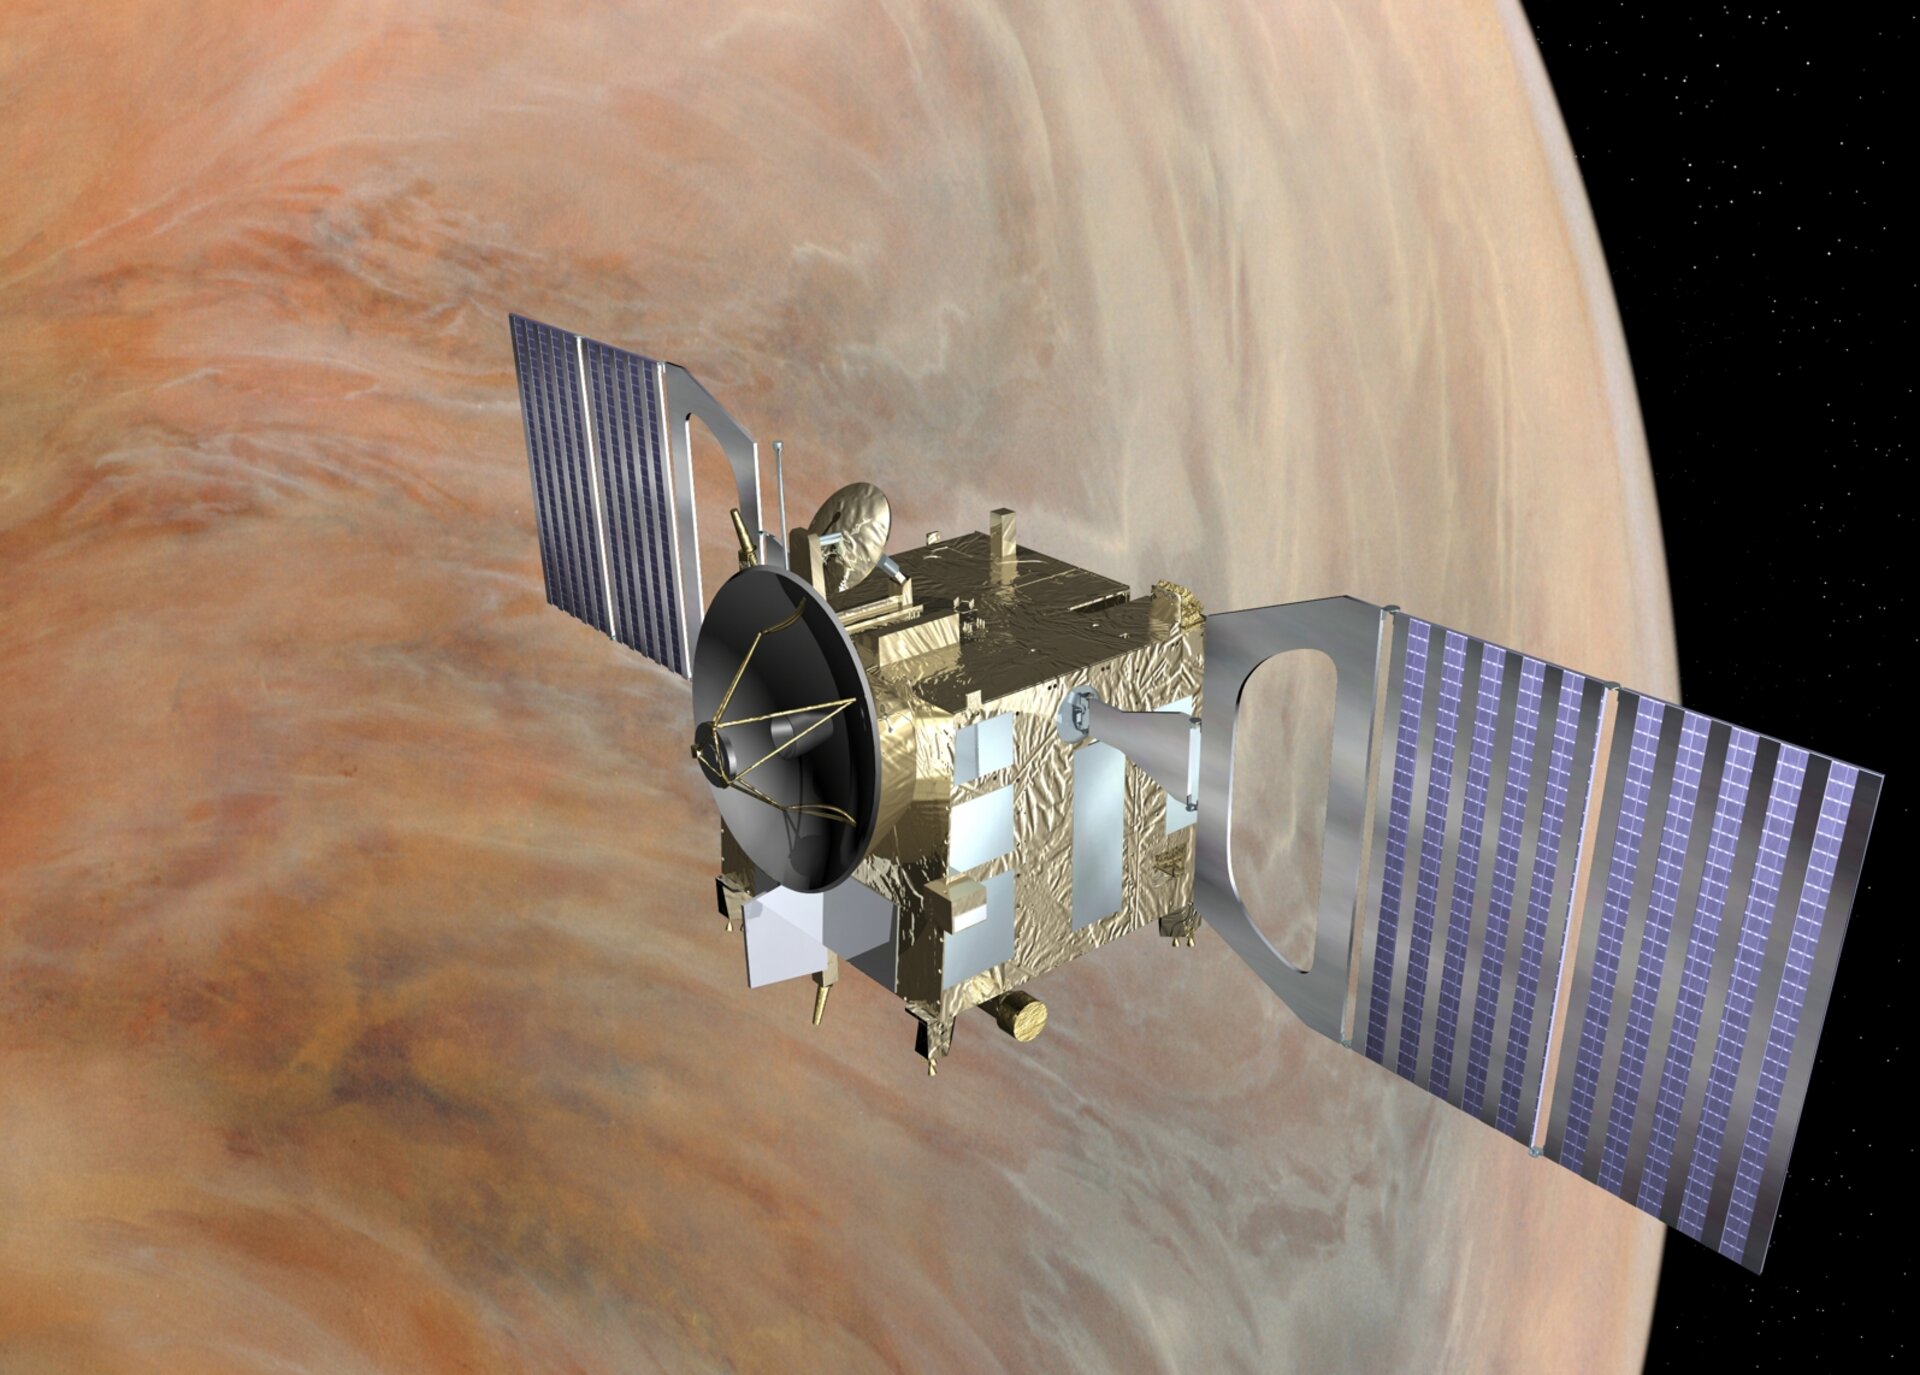 ESA - Venus Express and MESSENGER to look at Venus in tandem